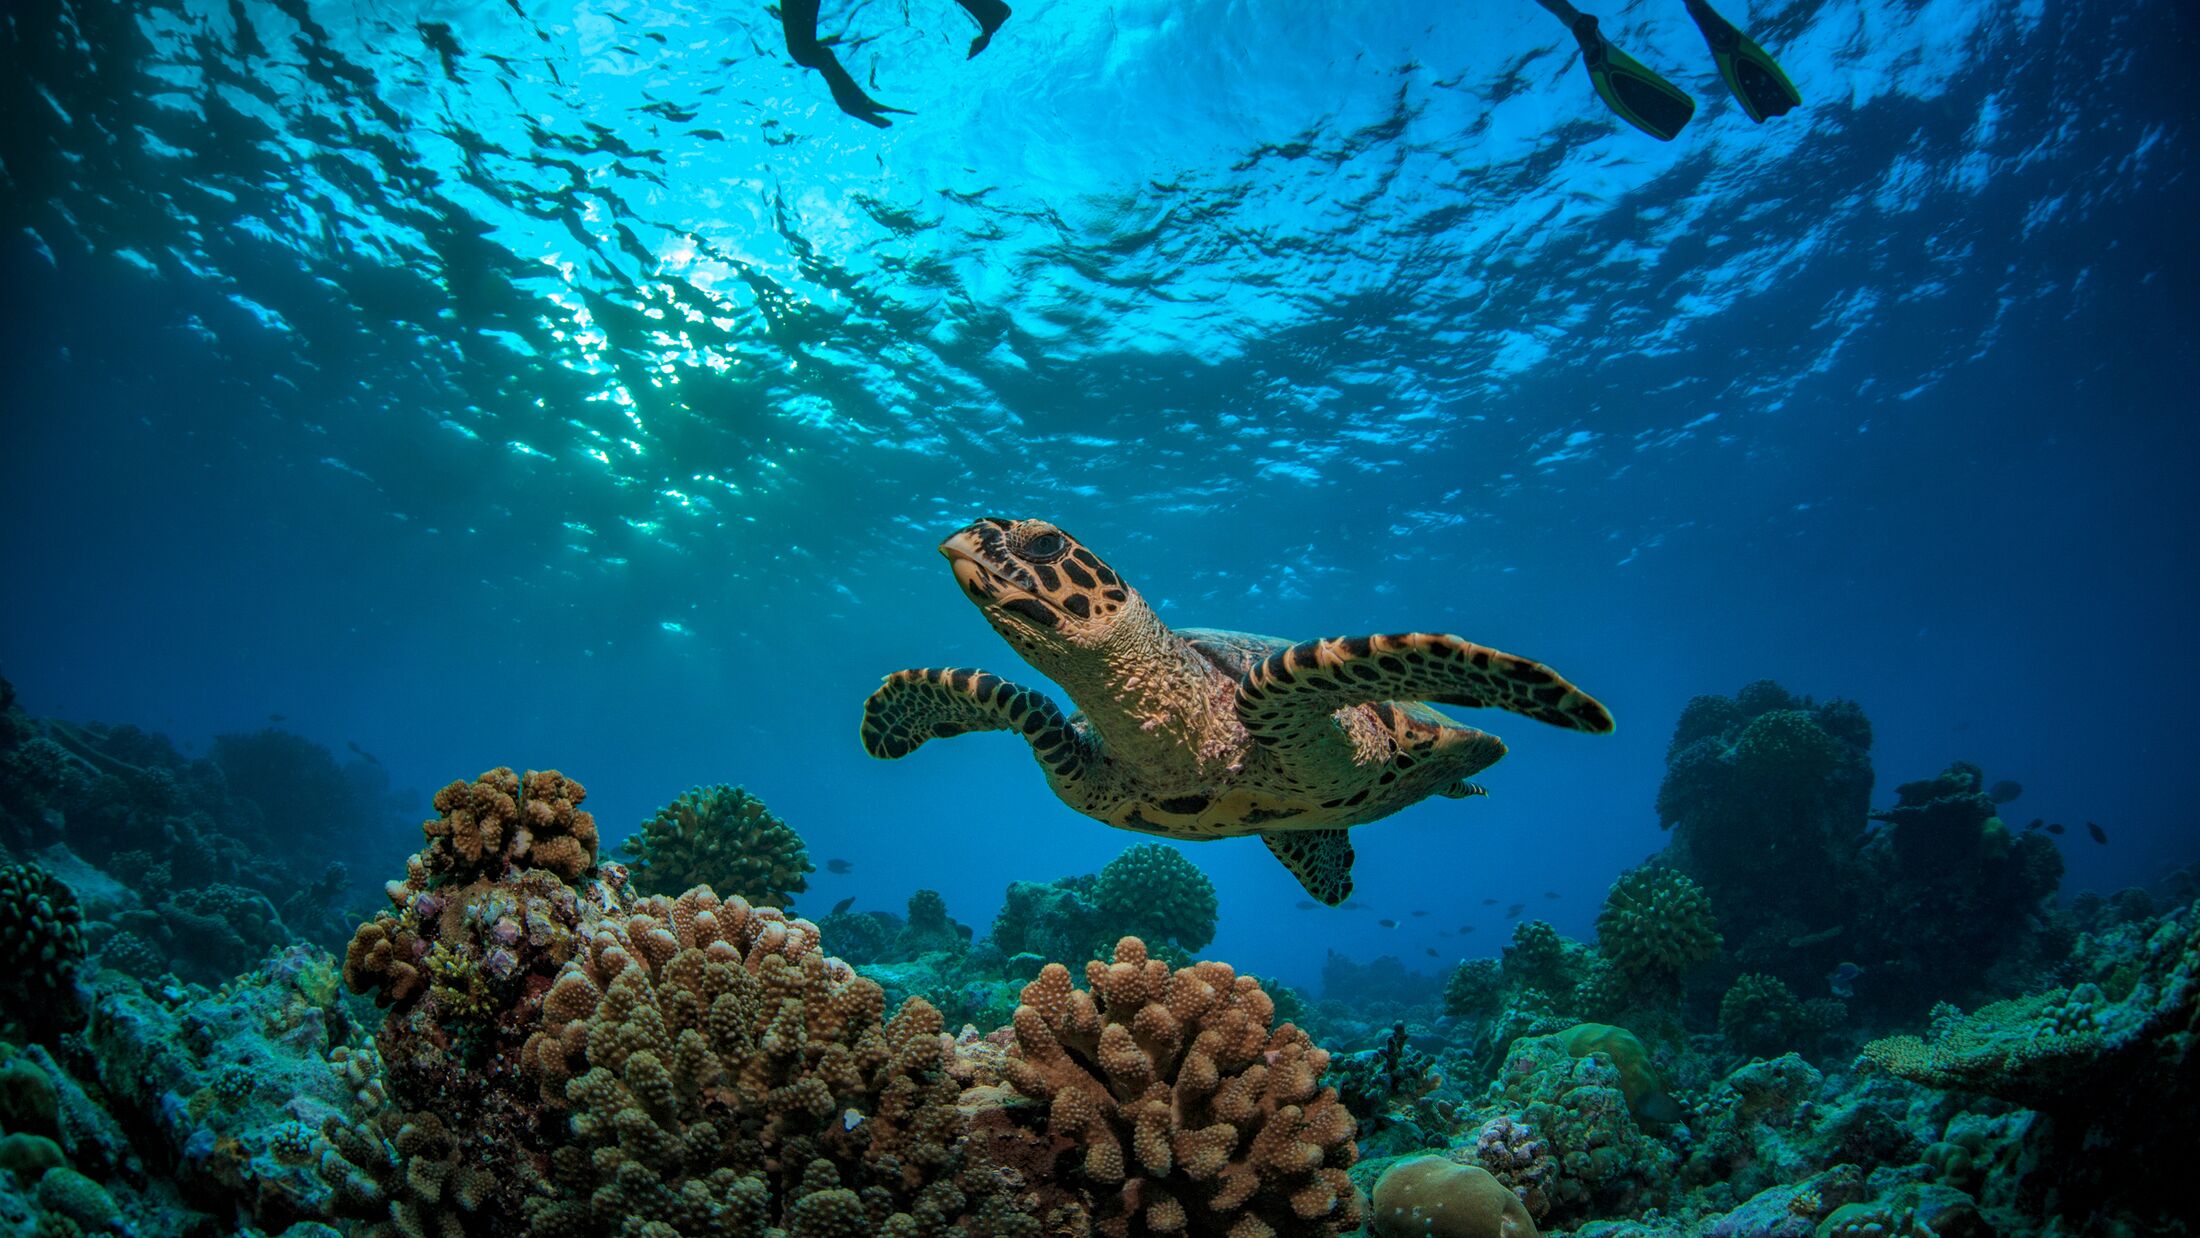 Coral reef with turtle underwater in Indian ocean